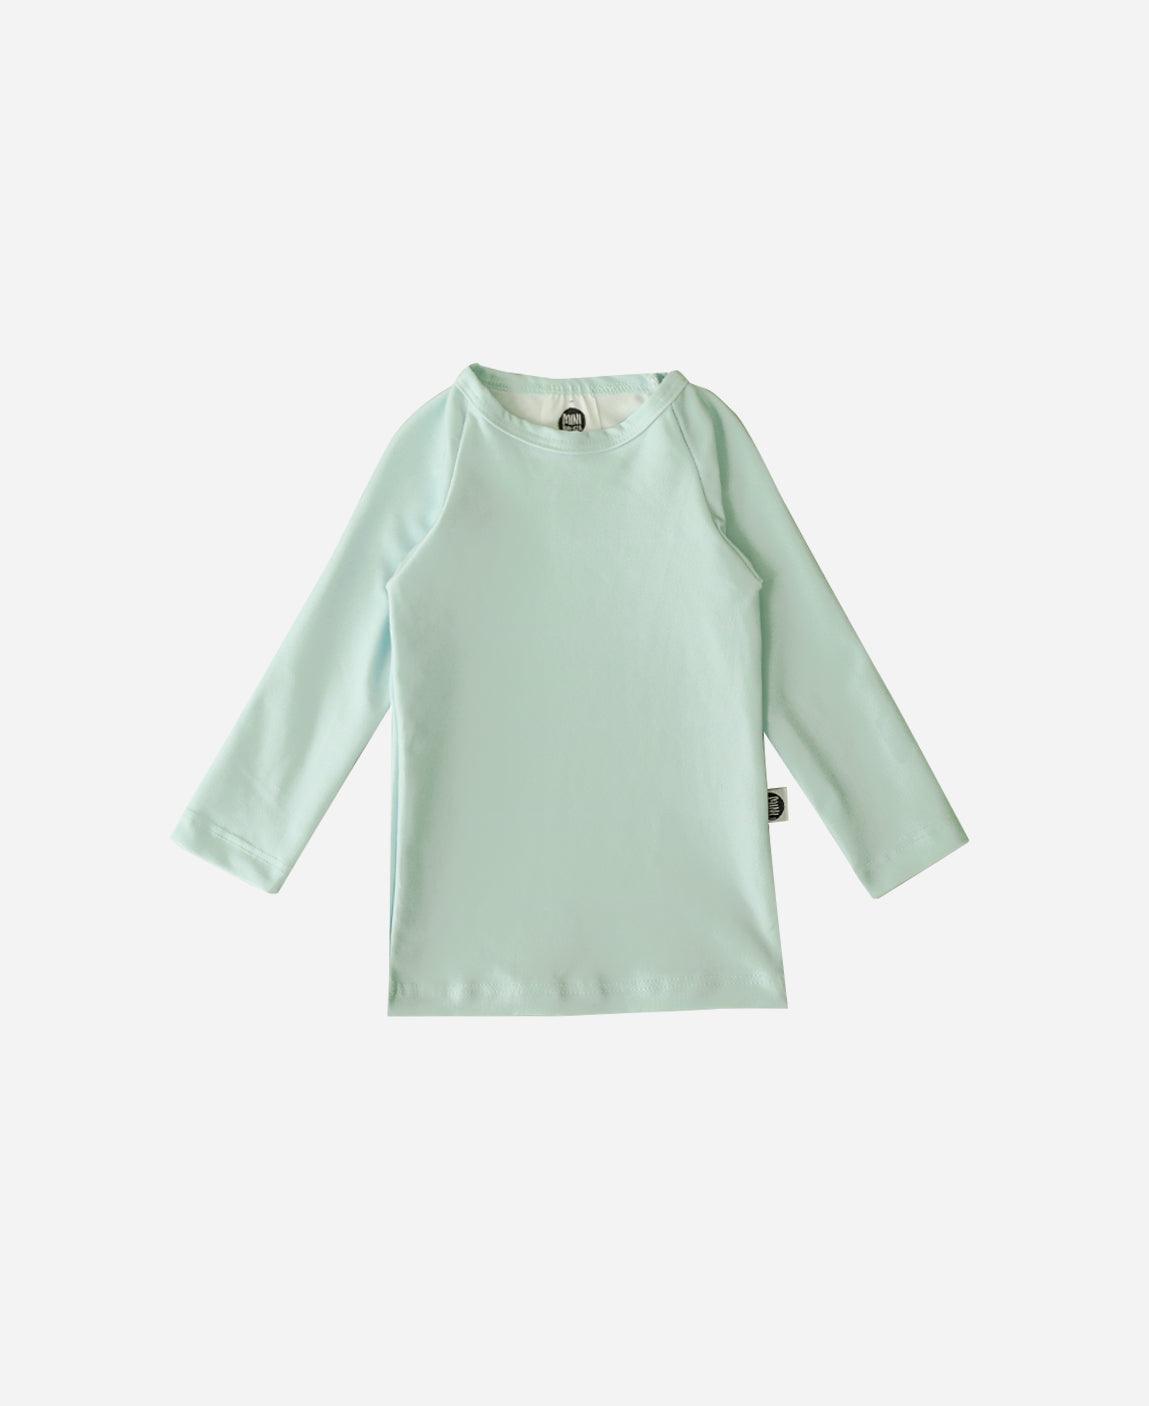 Camiseta Infantil Proteção Solar Unissex UV50+ MiniMalista Liso Mint - MiniMalista Baby - b2b, Calor, com-desconto-mm10, Menino, new, Verão -bebê-minimalista-estiloso